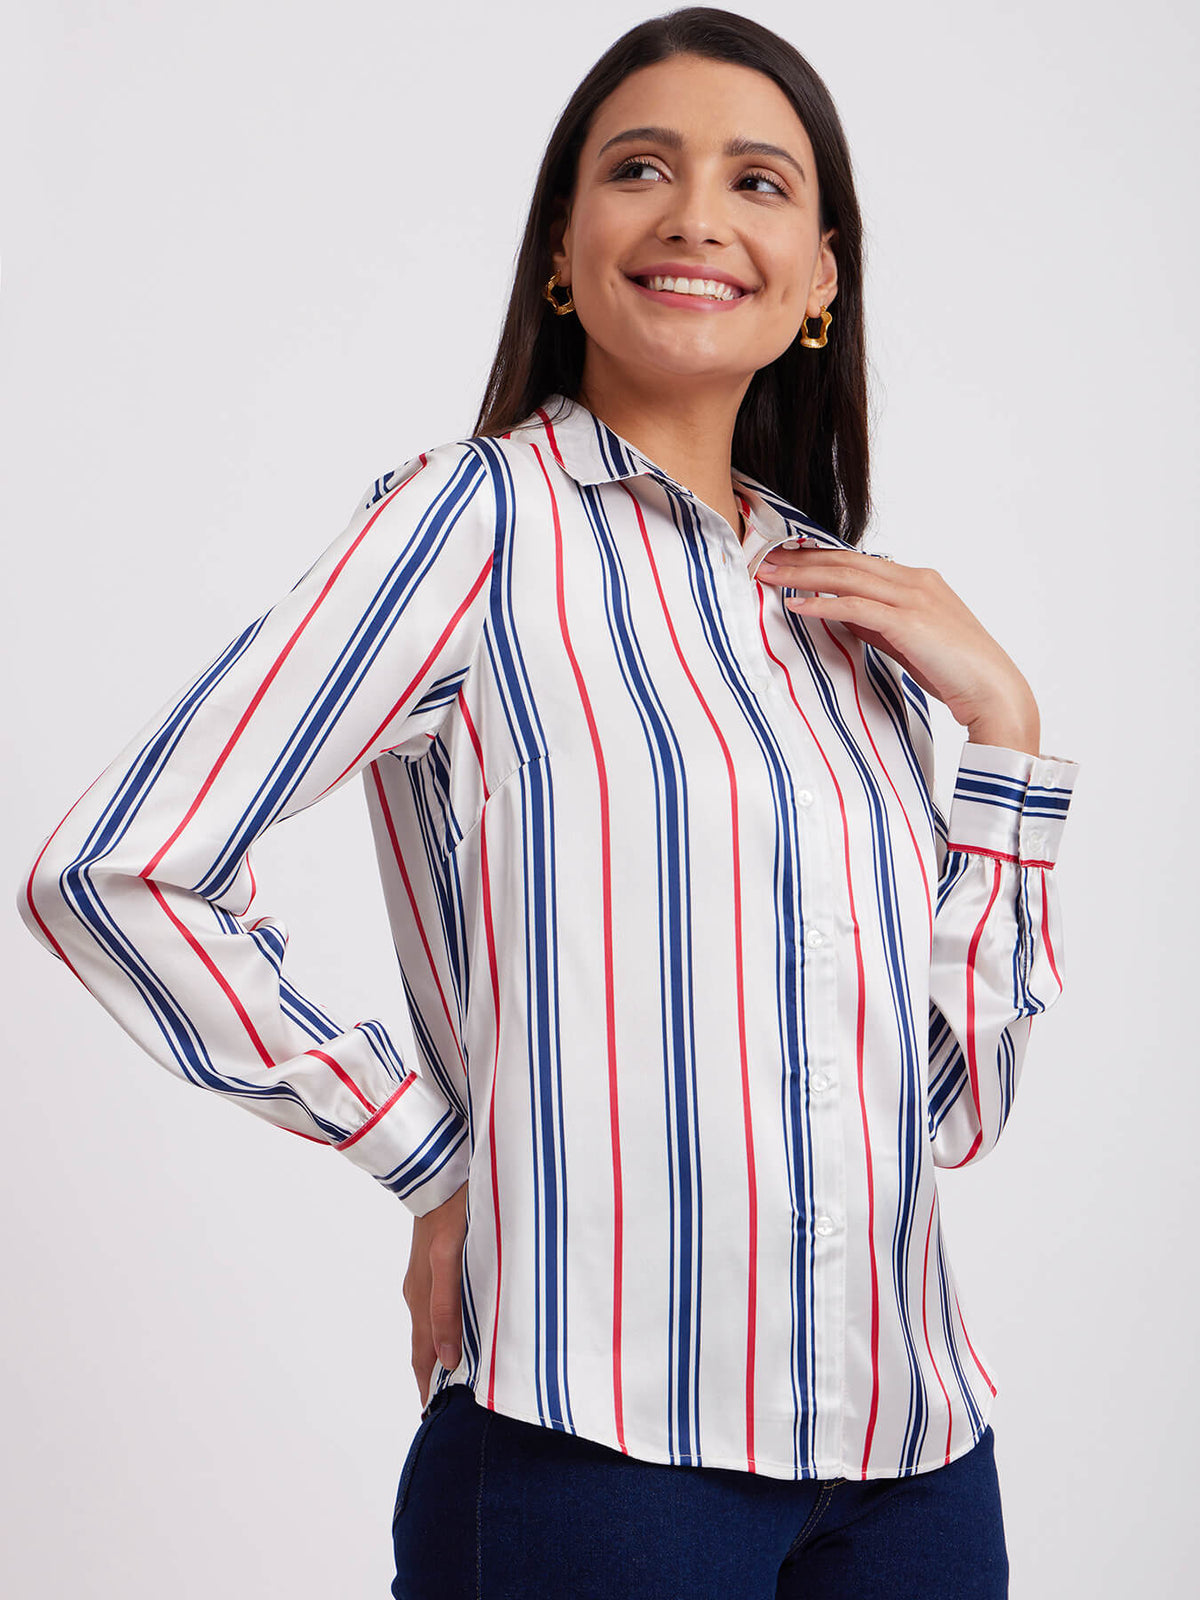 Satin Stripes Print Shirt - Multicolour